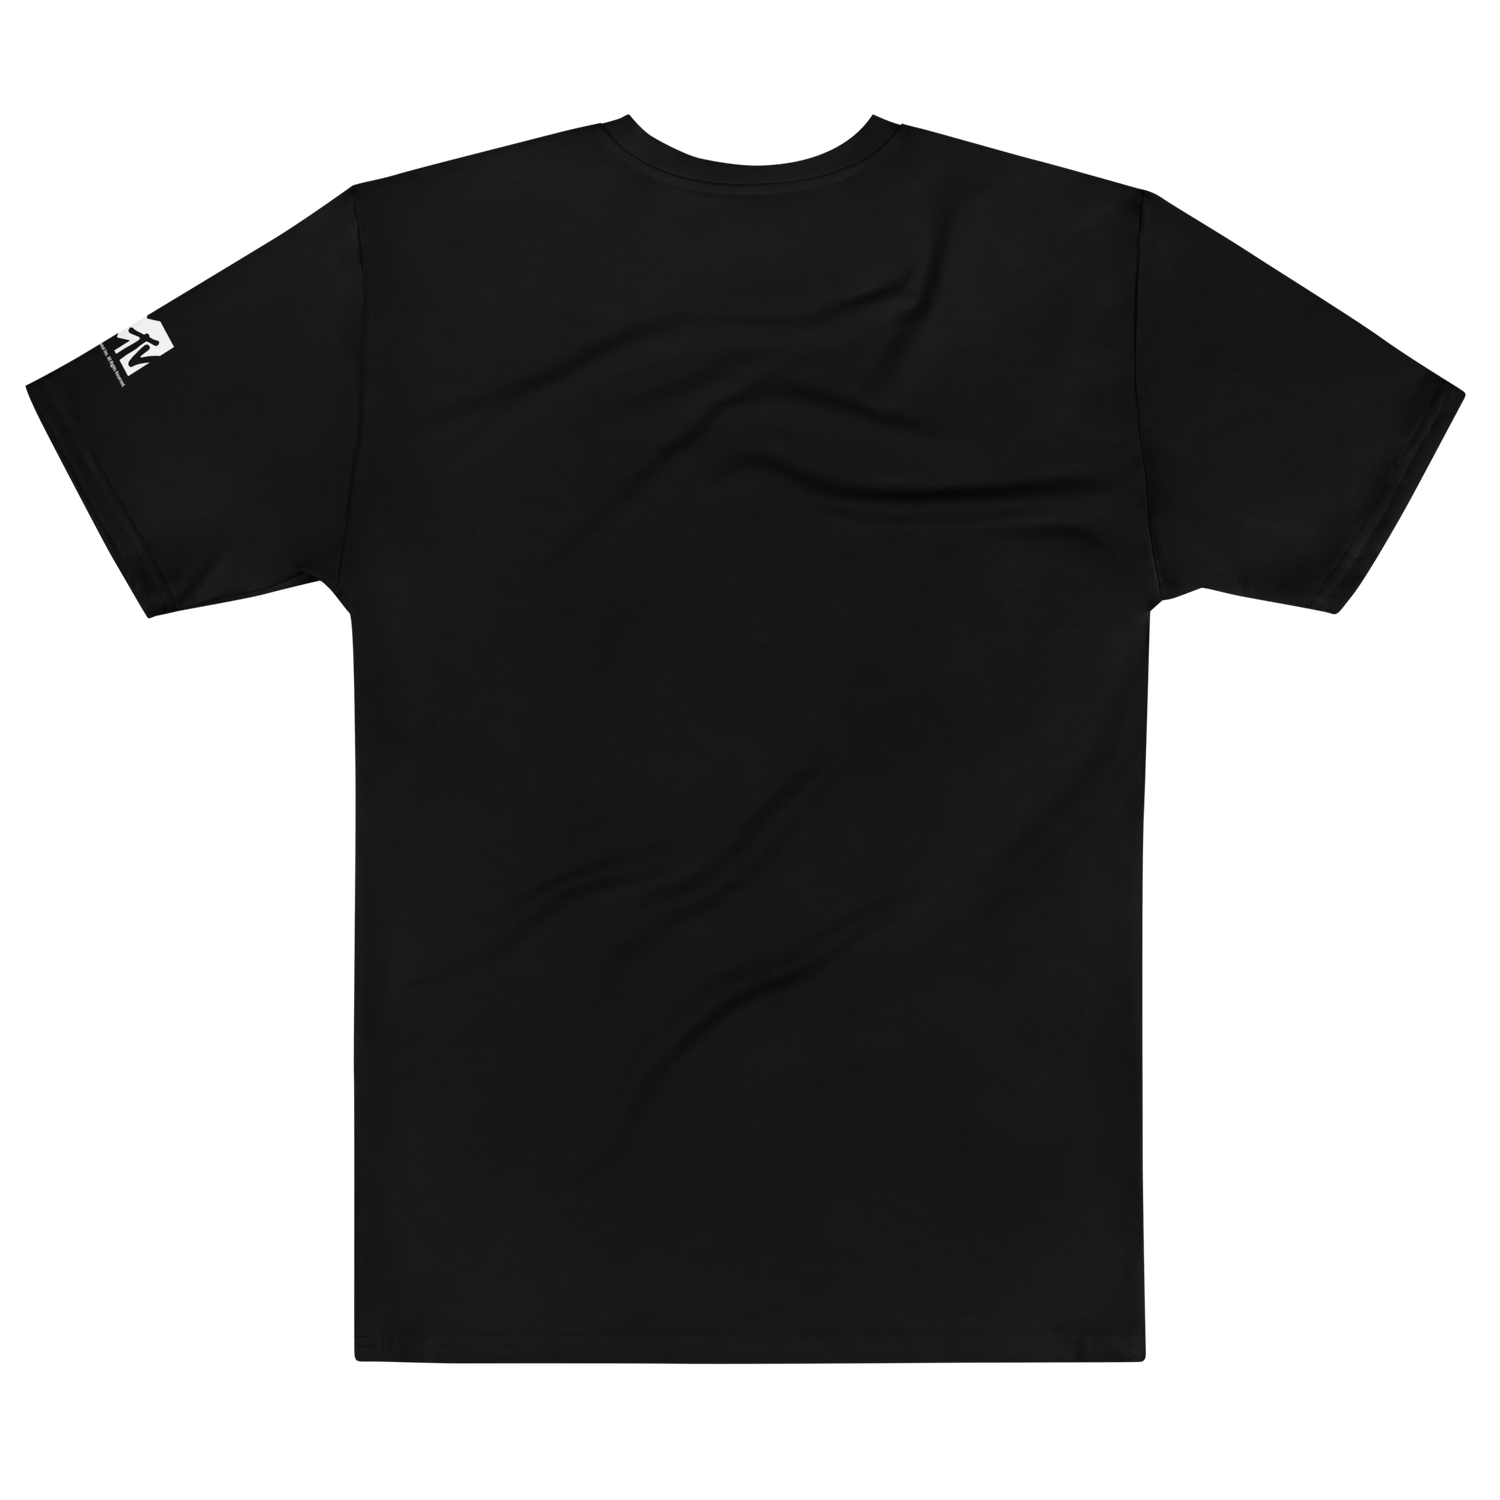 The Challenge Jersey Unisex Short Sleeve T - Shirt - Paramount Shop